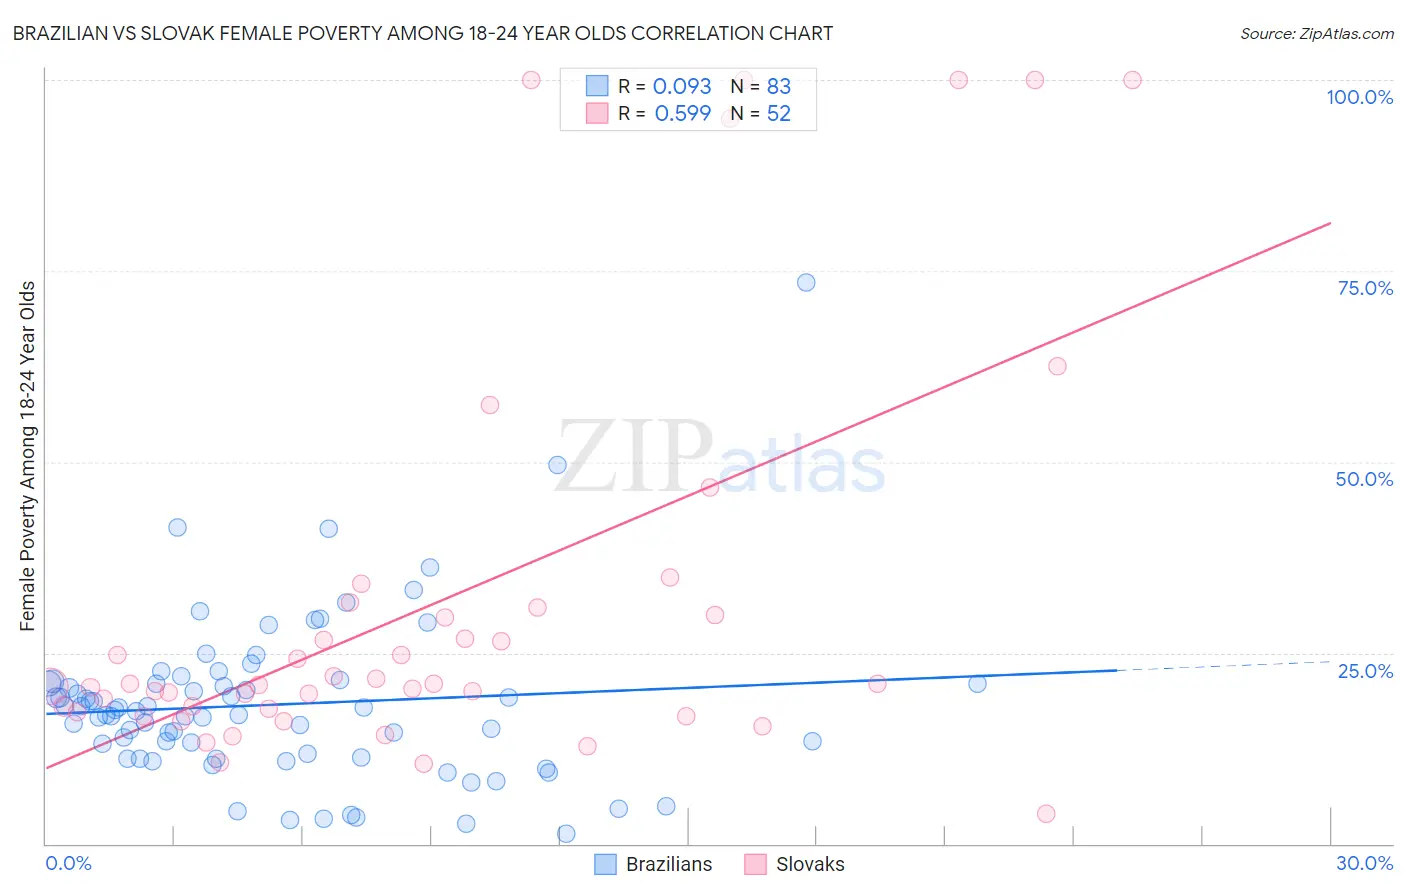 Brazilian vs Slovak Female Poverty Among 18-24 Year Olds